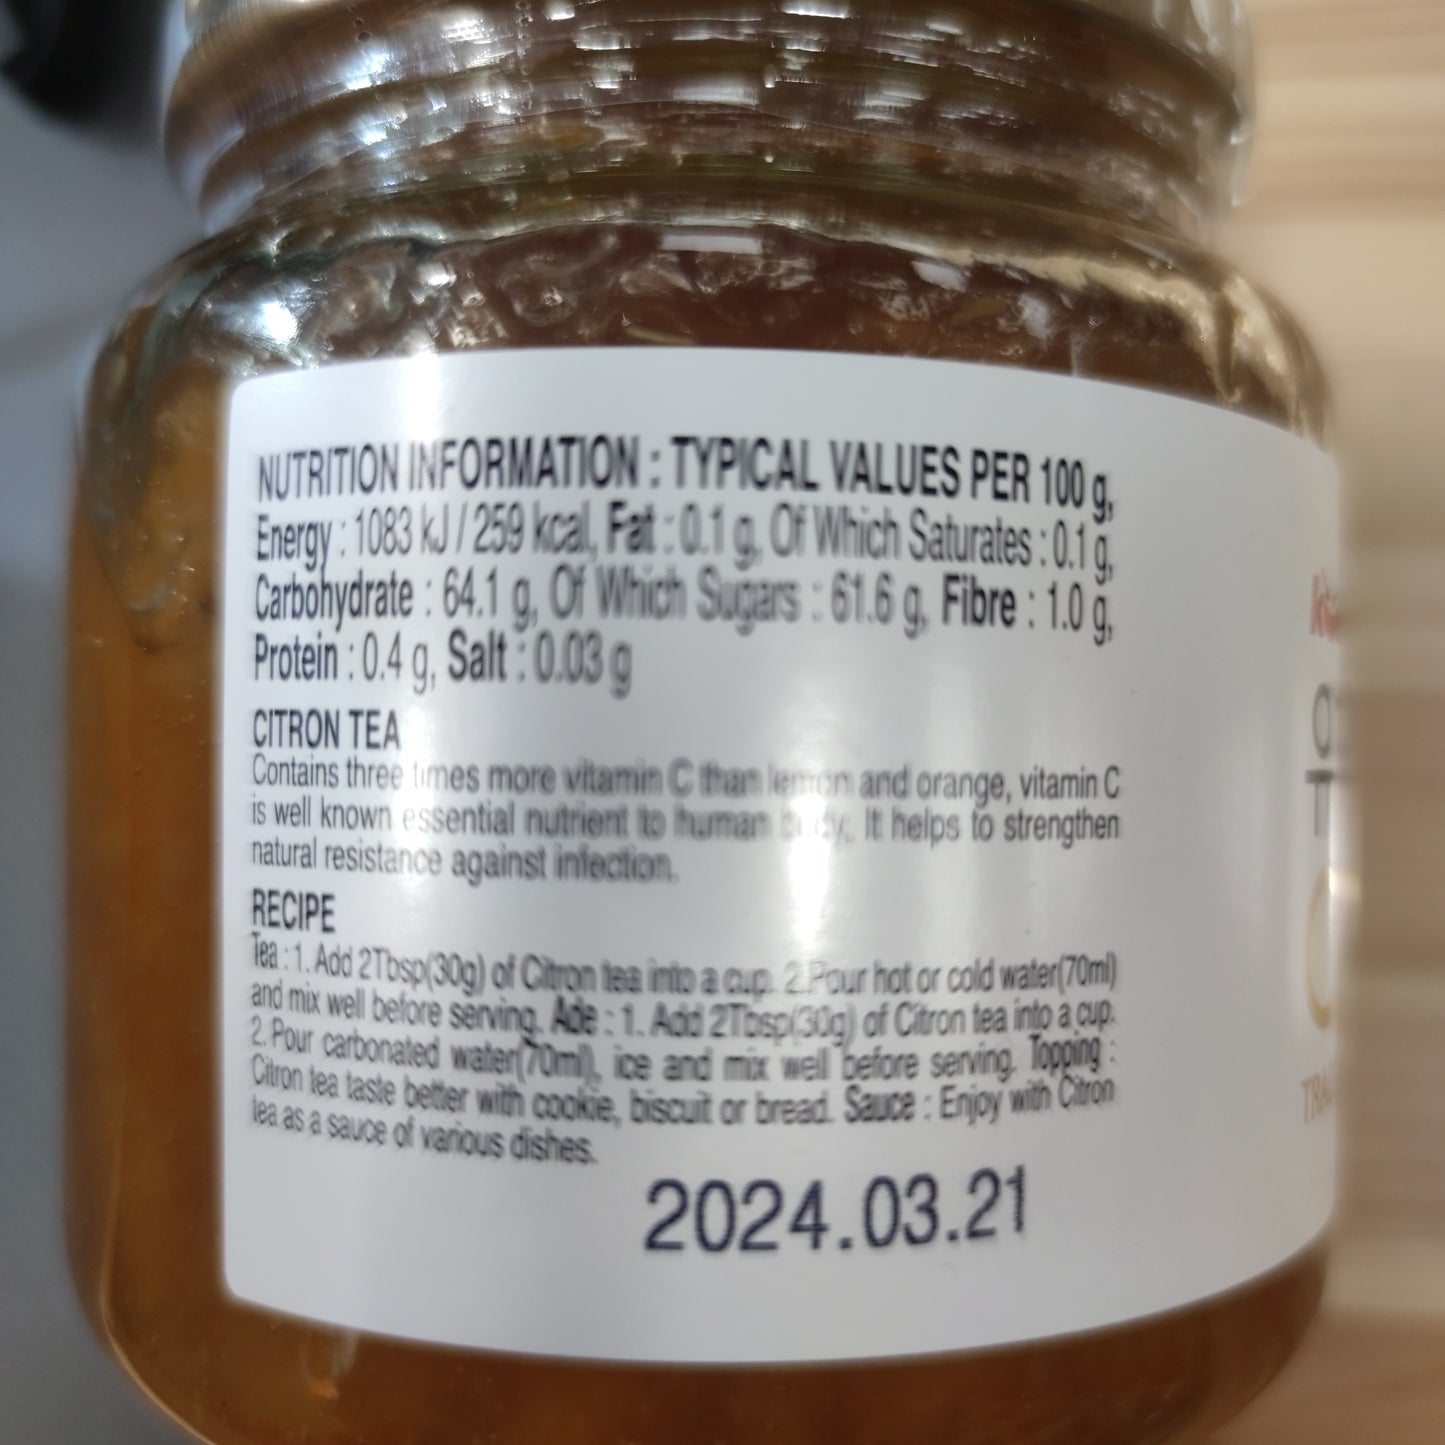 K Eats Citron Tea (Jar) 580g 韓國柚子茶